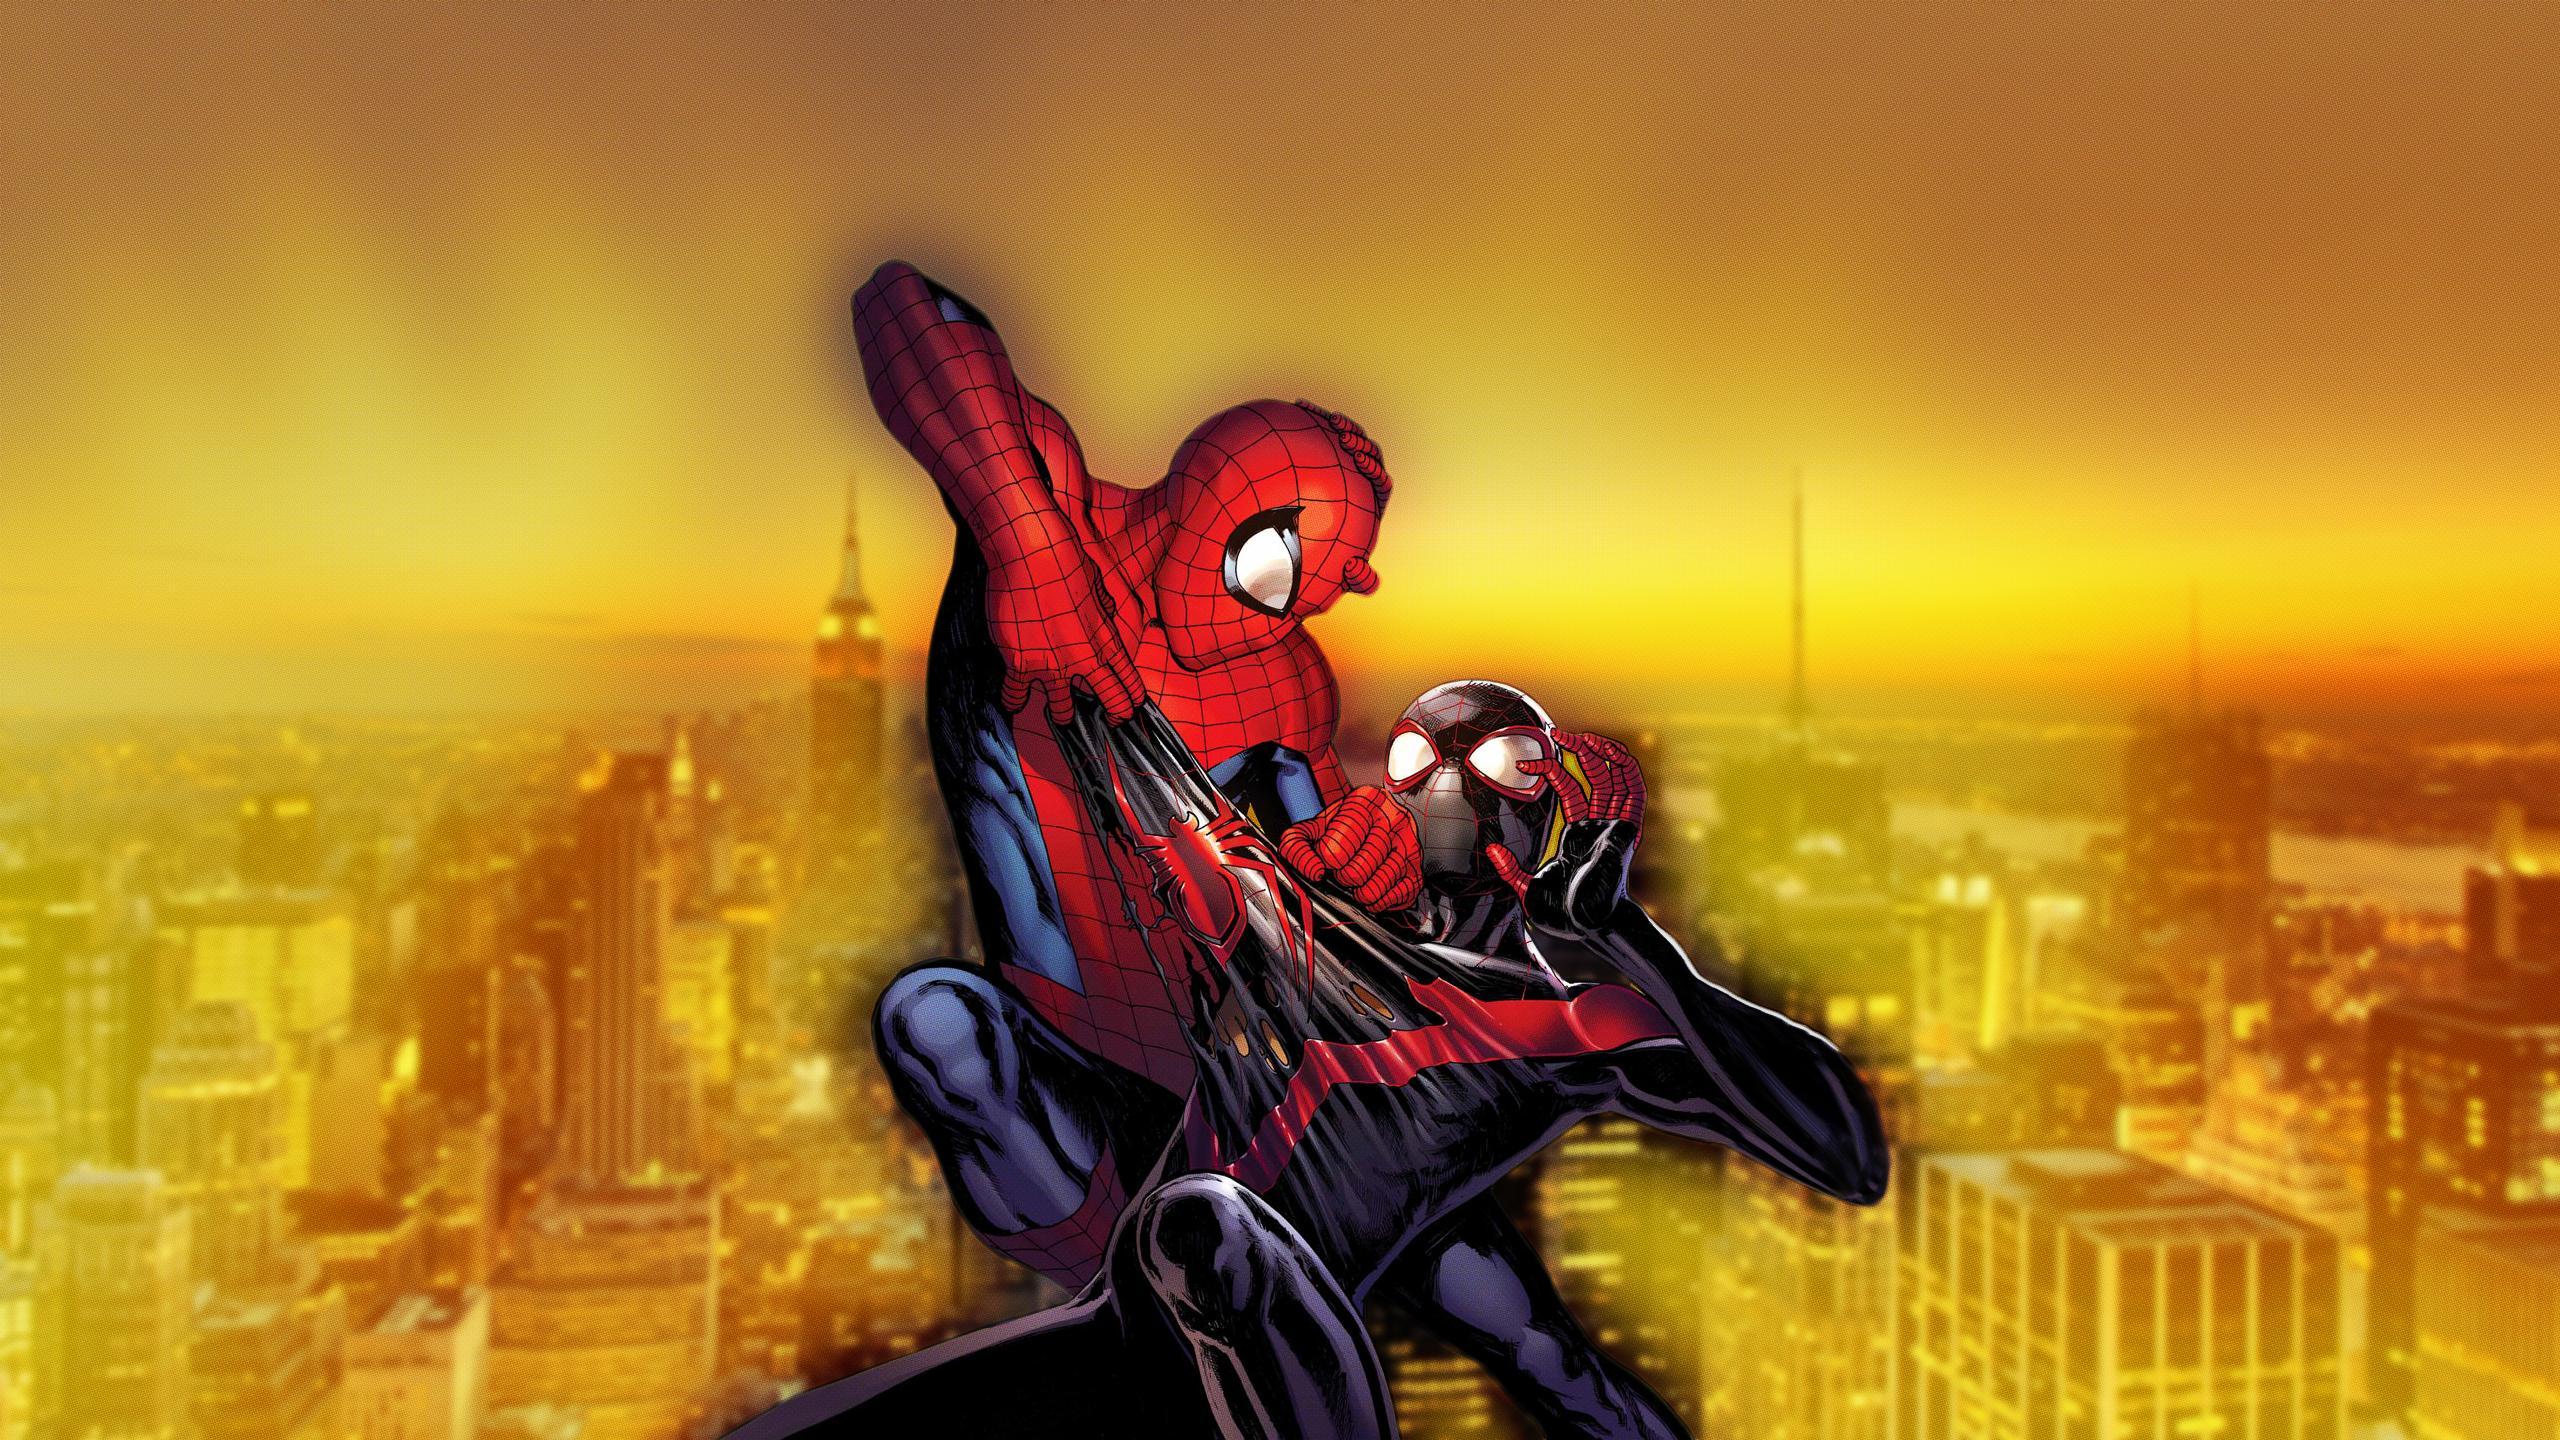 1440p Spiderman & Spiderman Wallpaper